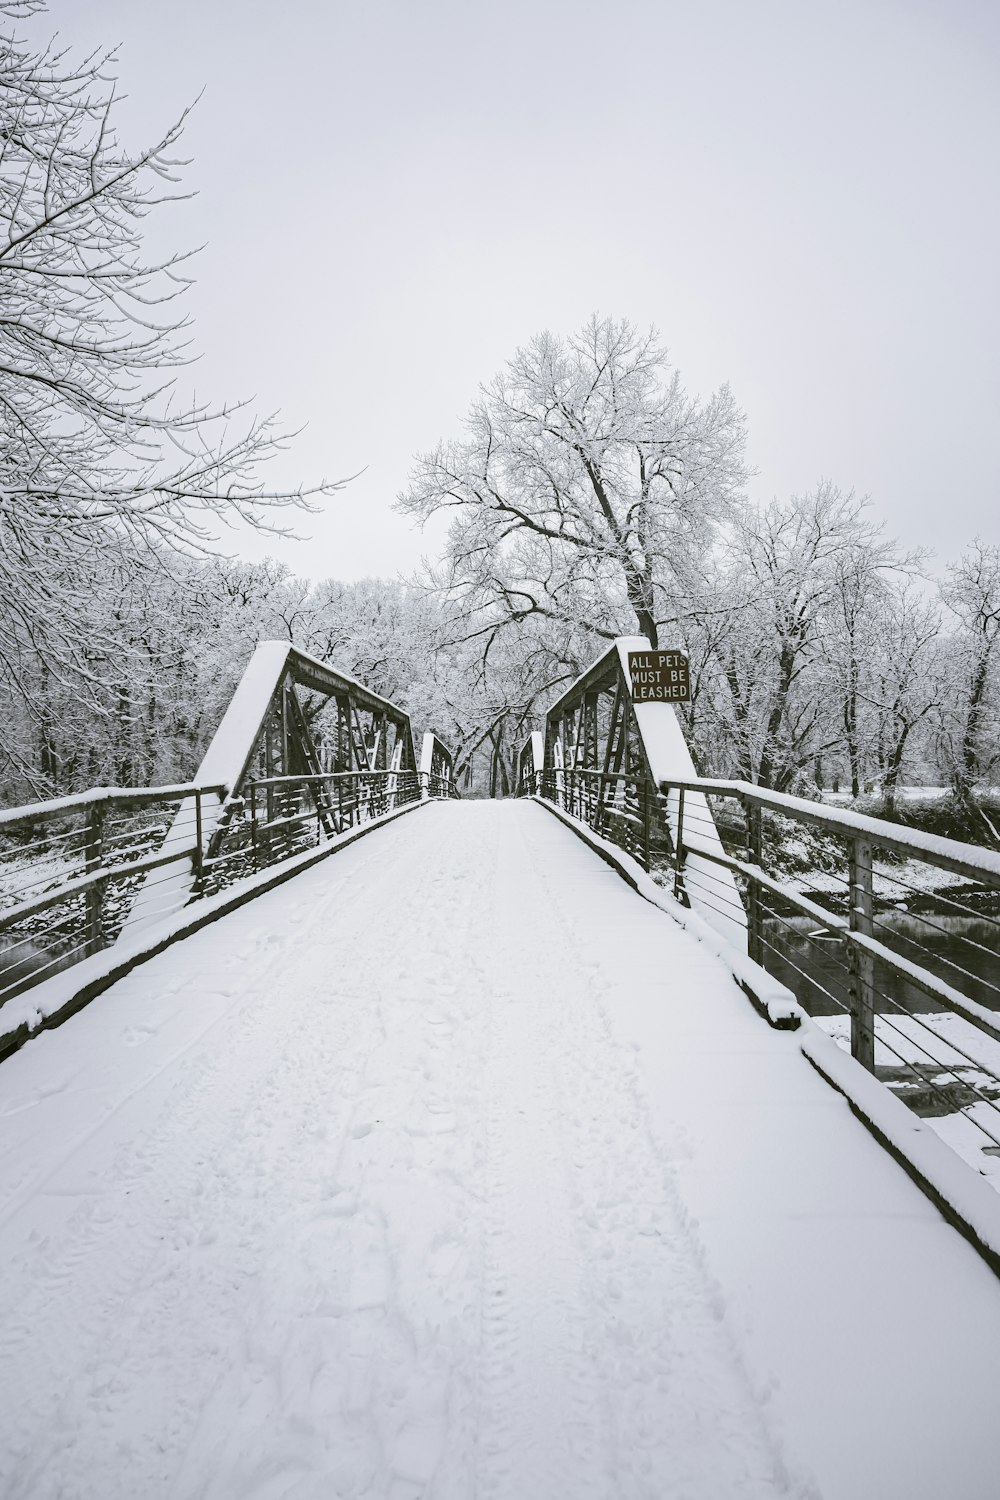 a bridge with snow on it